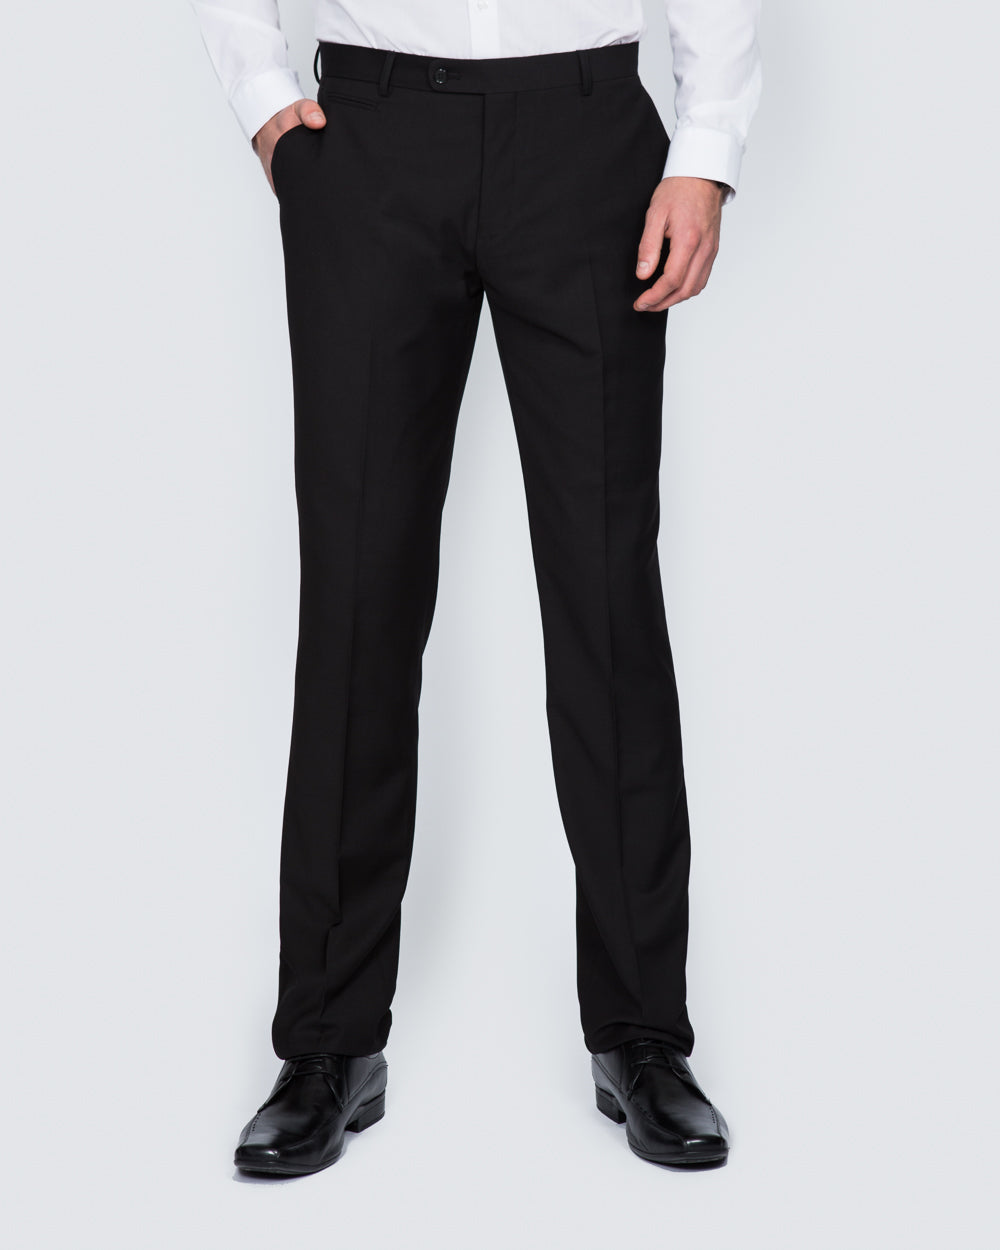 Skopes Slim Fit Tall Suit (black)